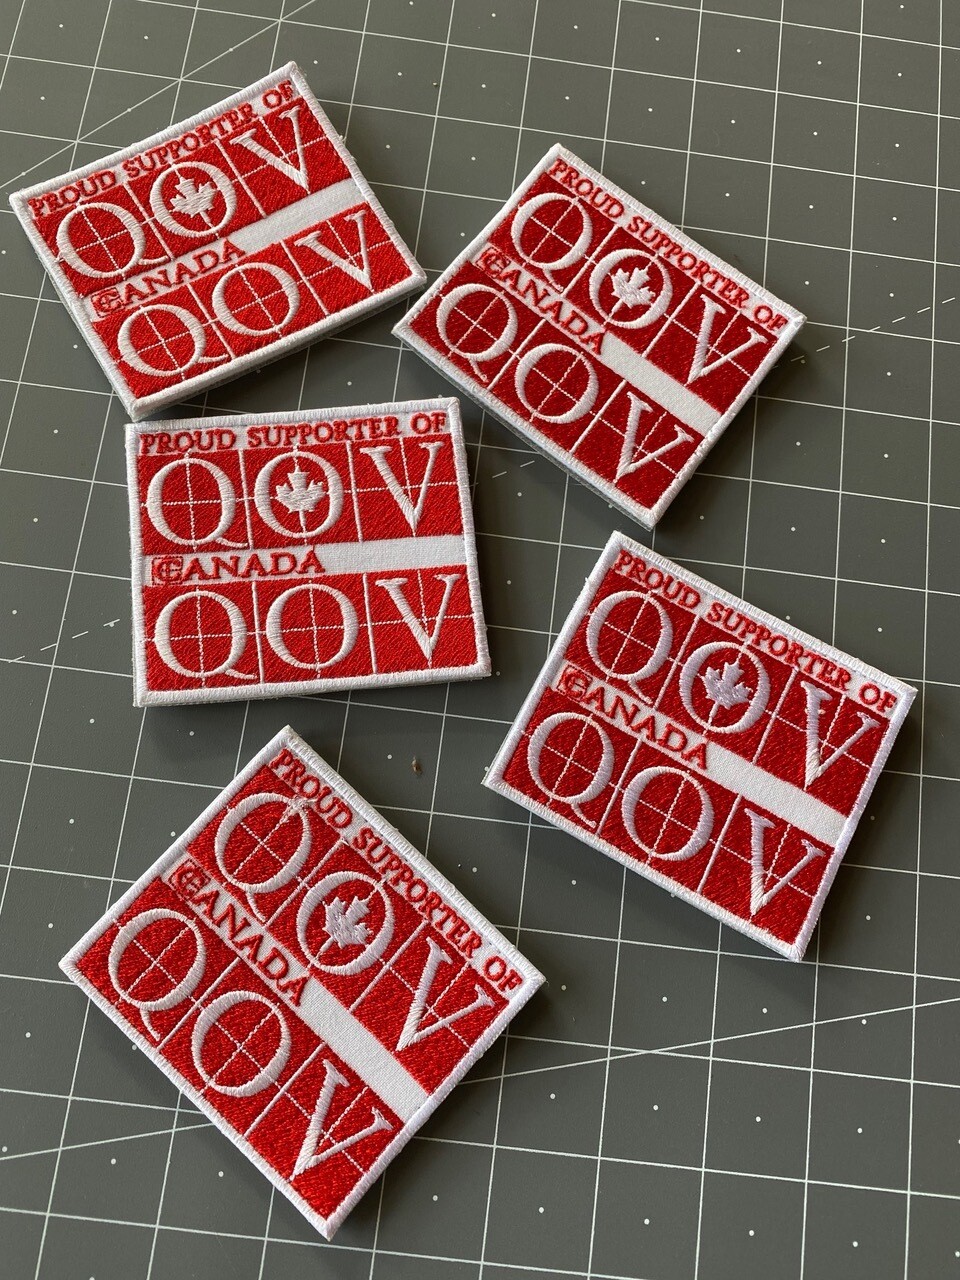 Embroidery QoVC patch